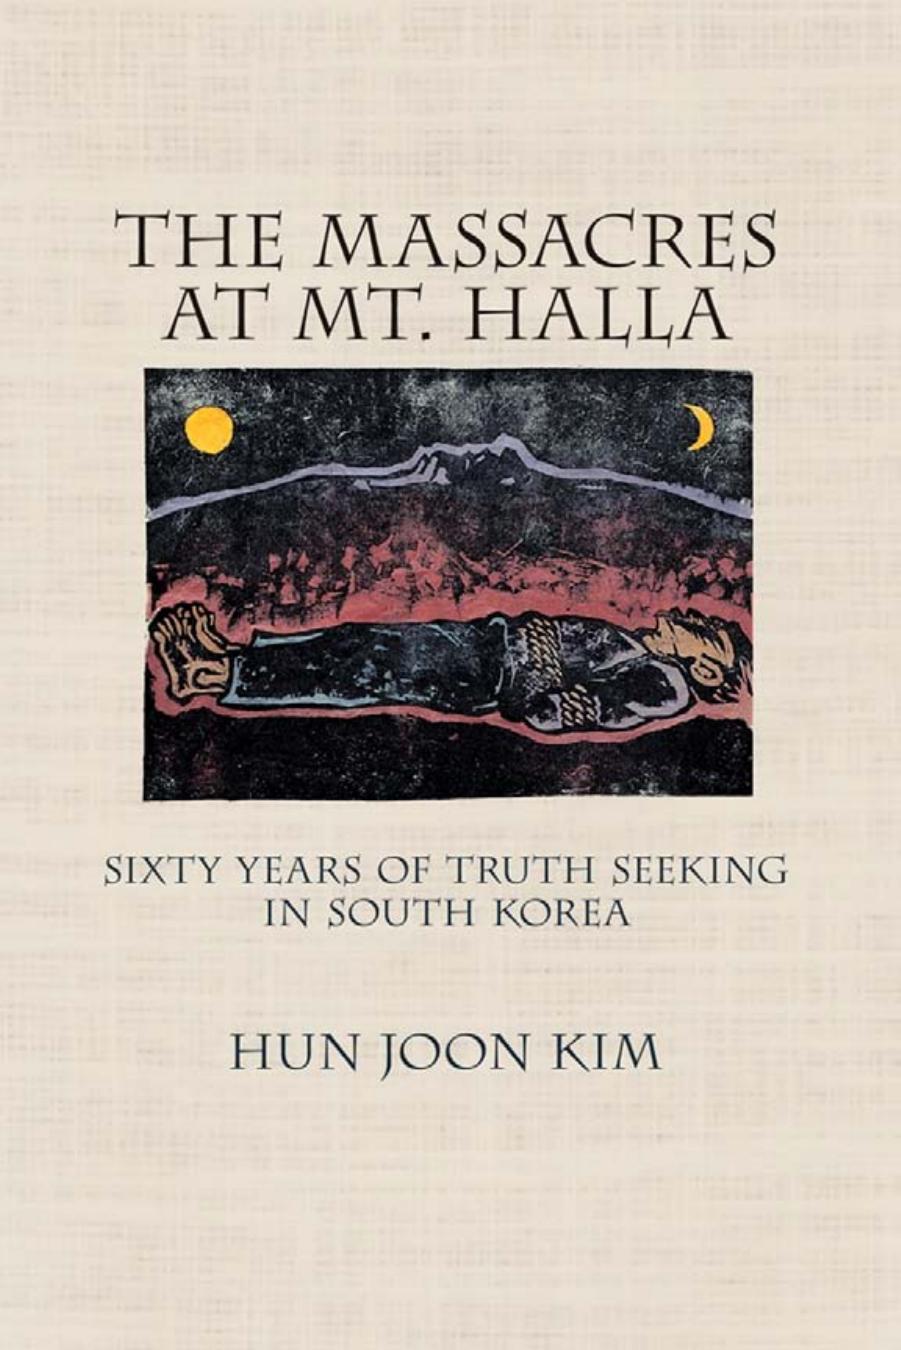 The Massacres at Mt. Halla: Sixty Years of Truth Seeking in South Korea by Hun Joon Kim